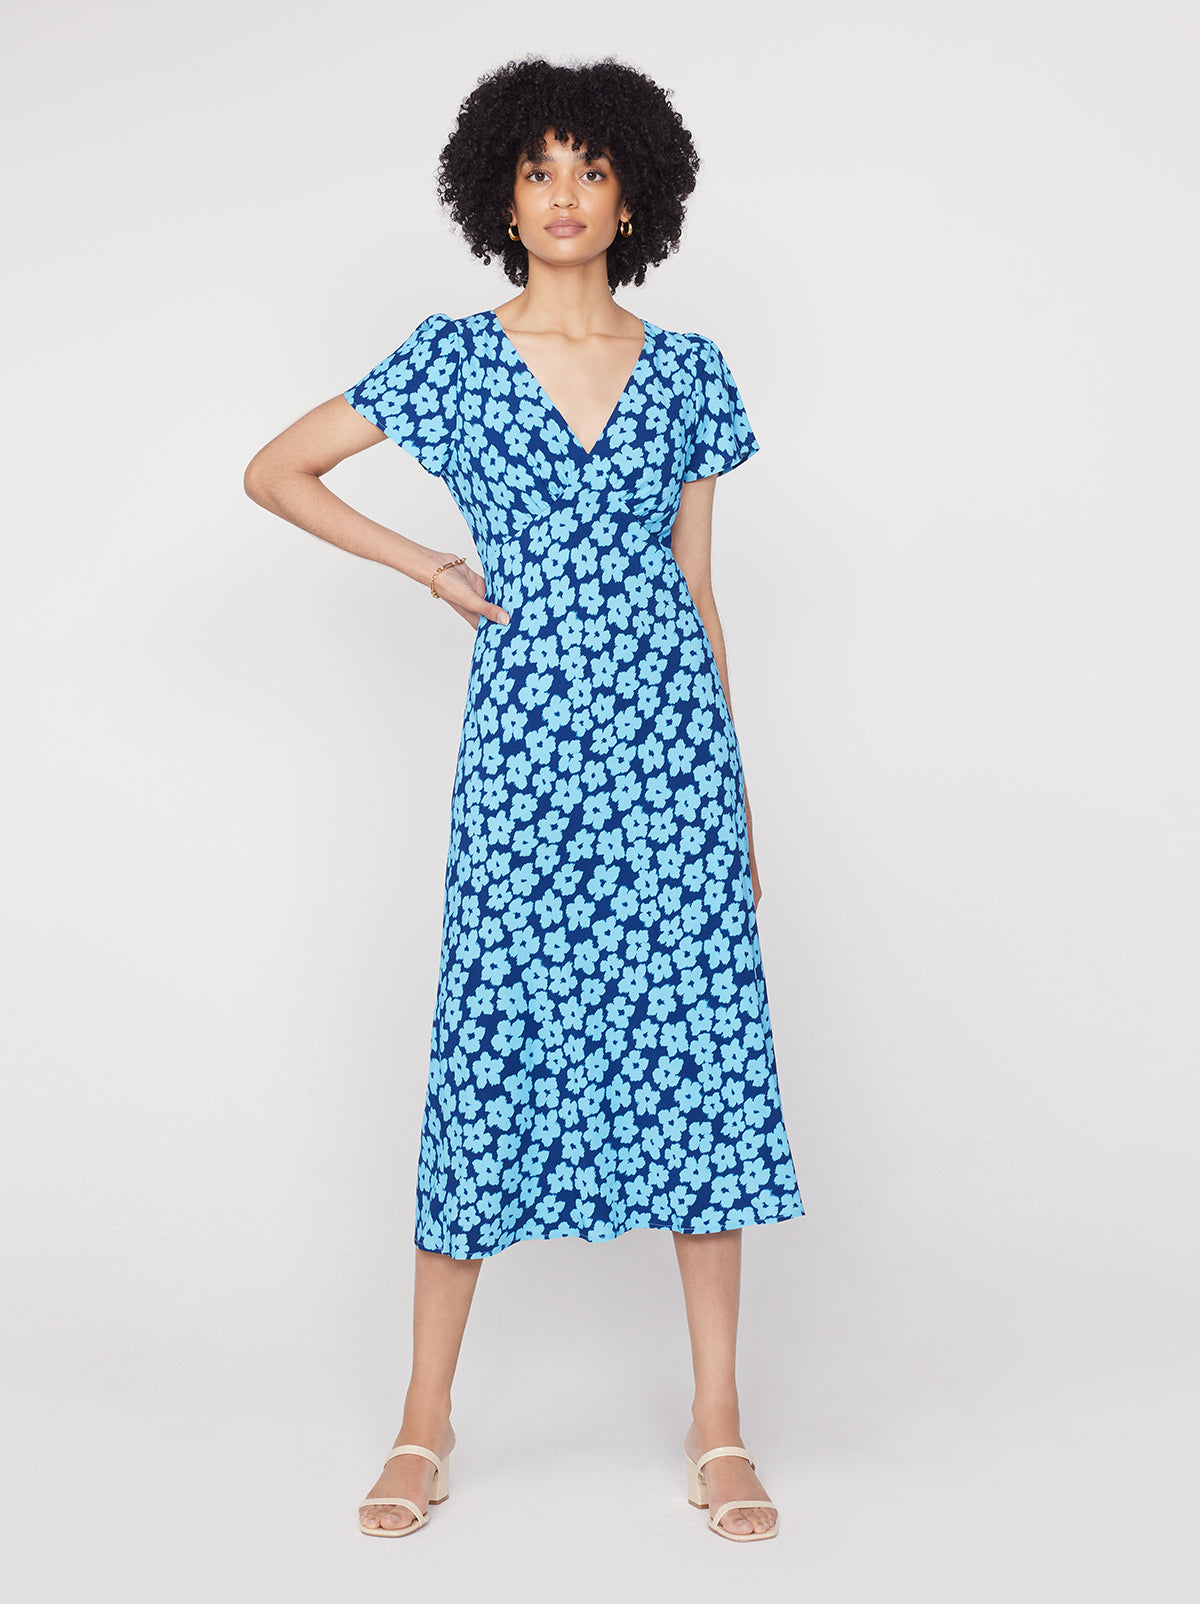 Effie Blue Blurred Floral Midi Dress